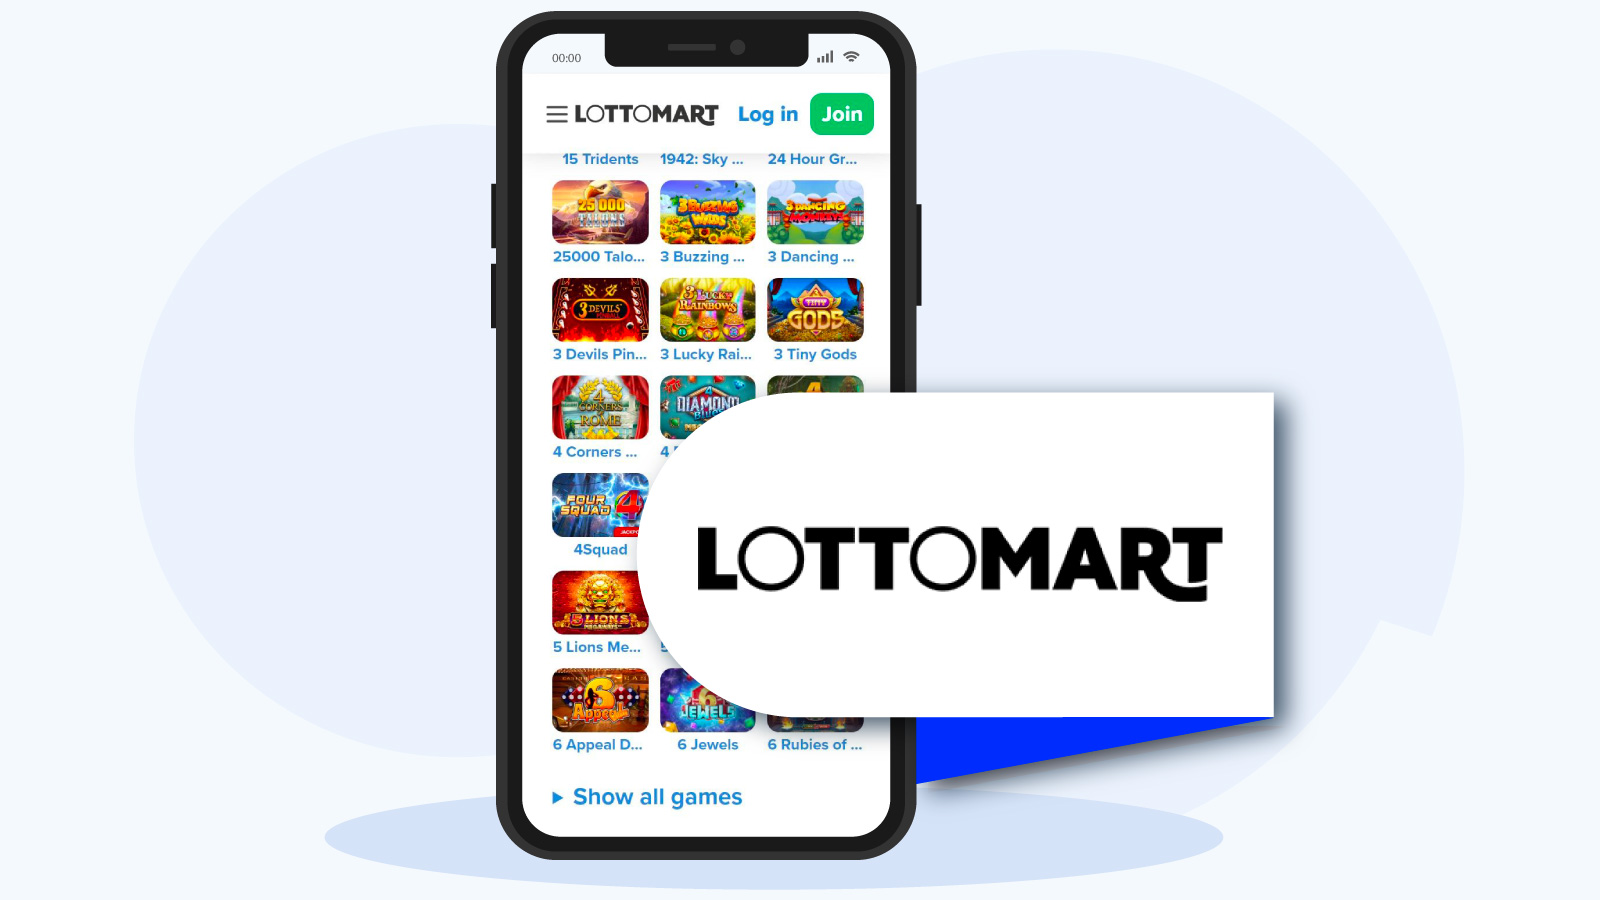 Lottomart – CasinoAlpha’s Android Casino Suggestion